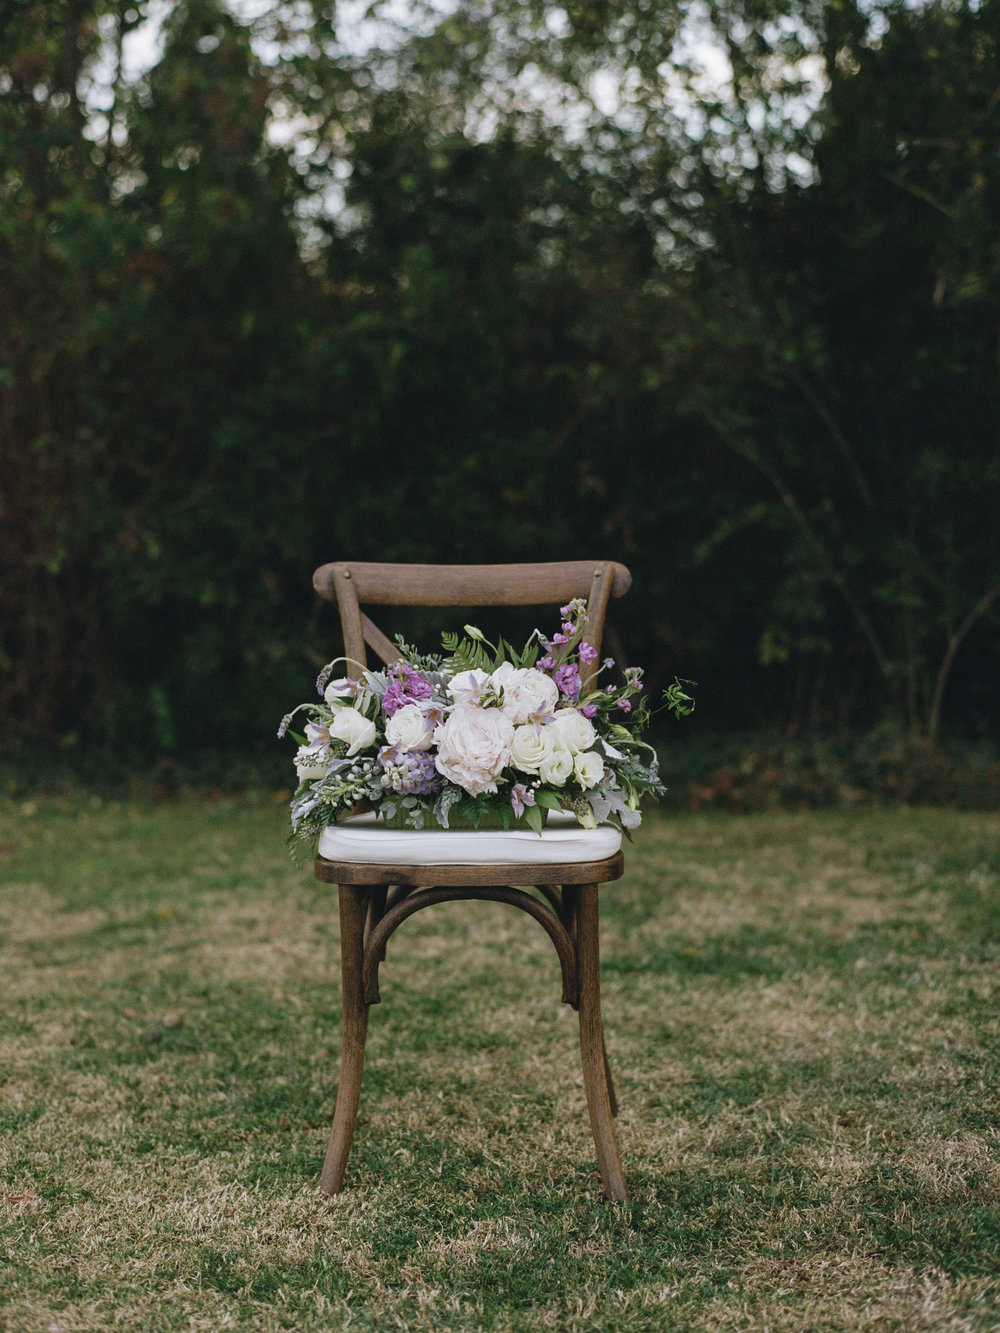 Violette-fleurs-roseville-sacramento-california-Flower-farm-inn-wedding-florist-spring-tablescape-blush-purples-sophisticated-design-chair-nature-upscale.jpg